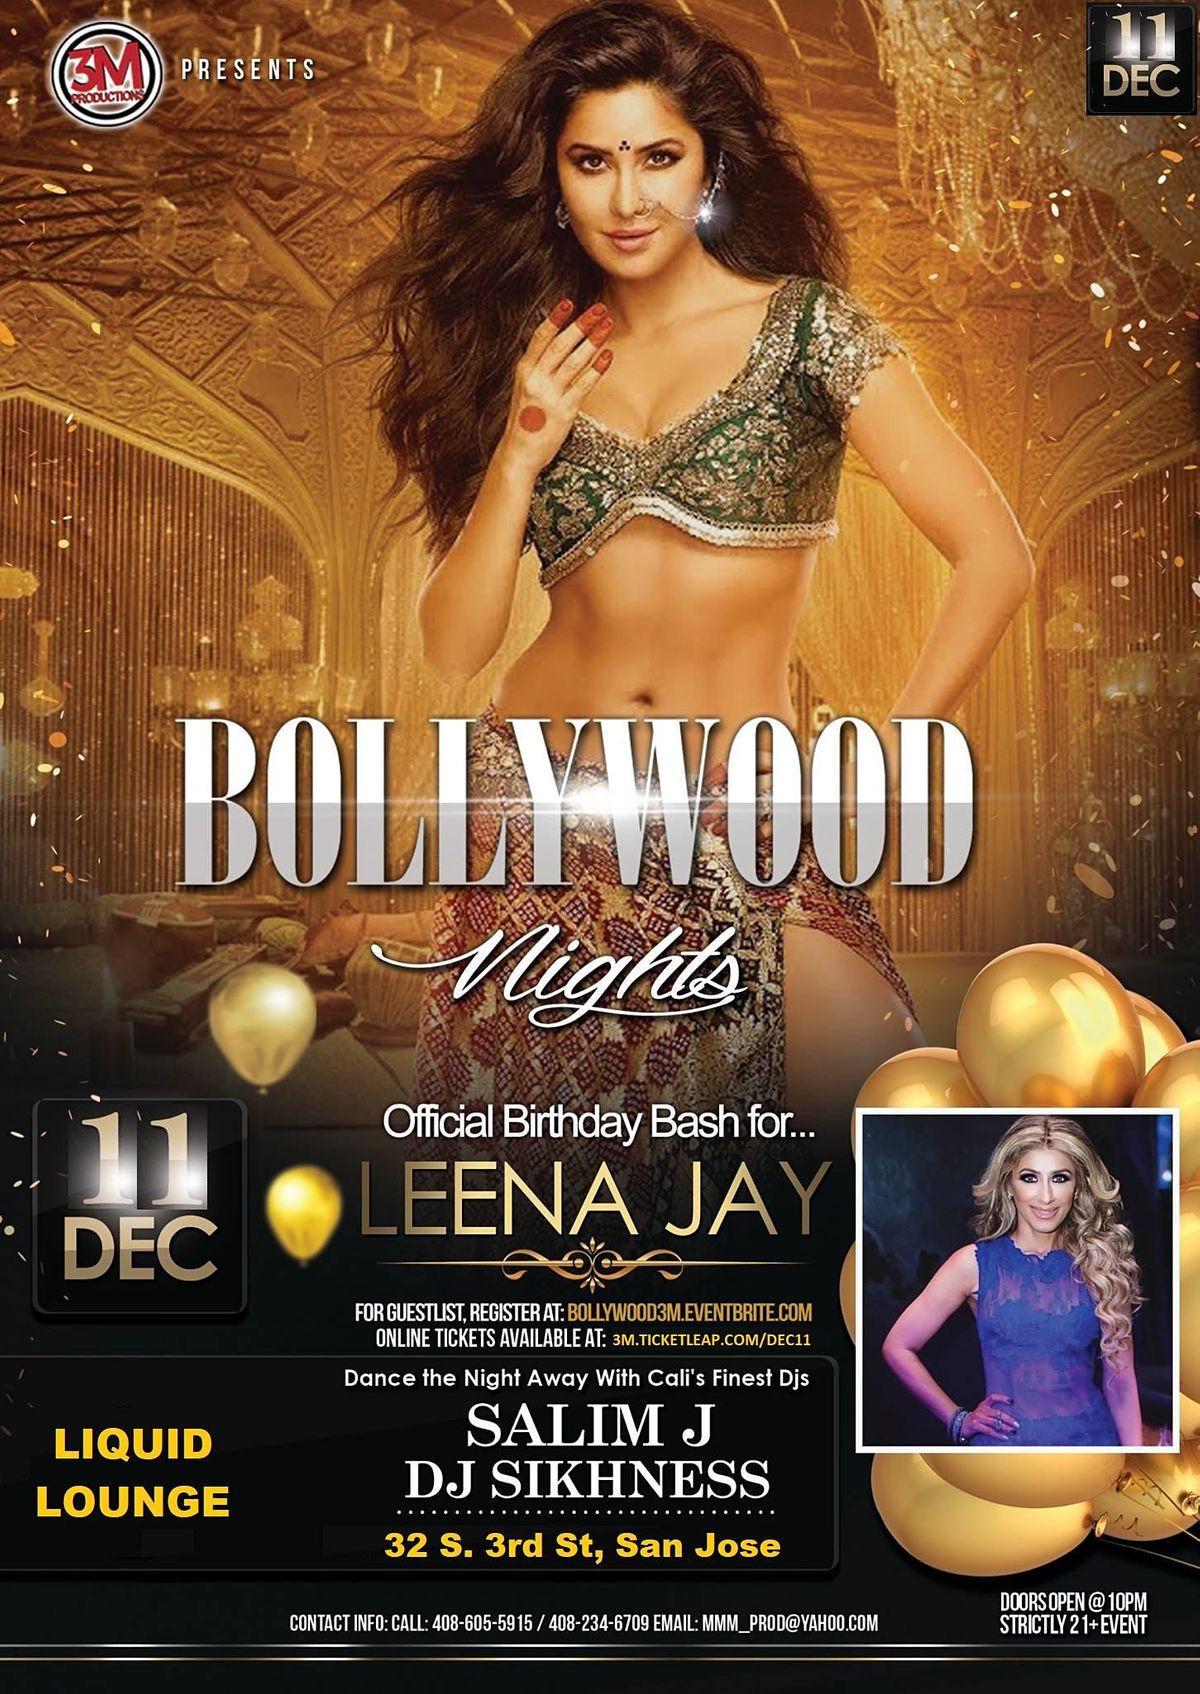 Bollywood Nights - Best of 2021 on Sat, Dec 11th at Liquid Lounge, San Jose